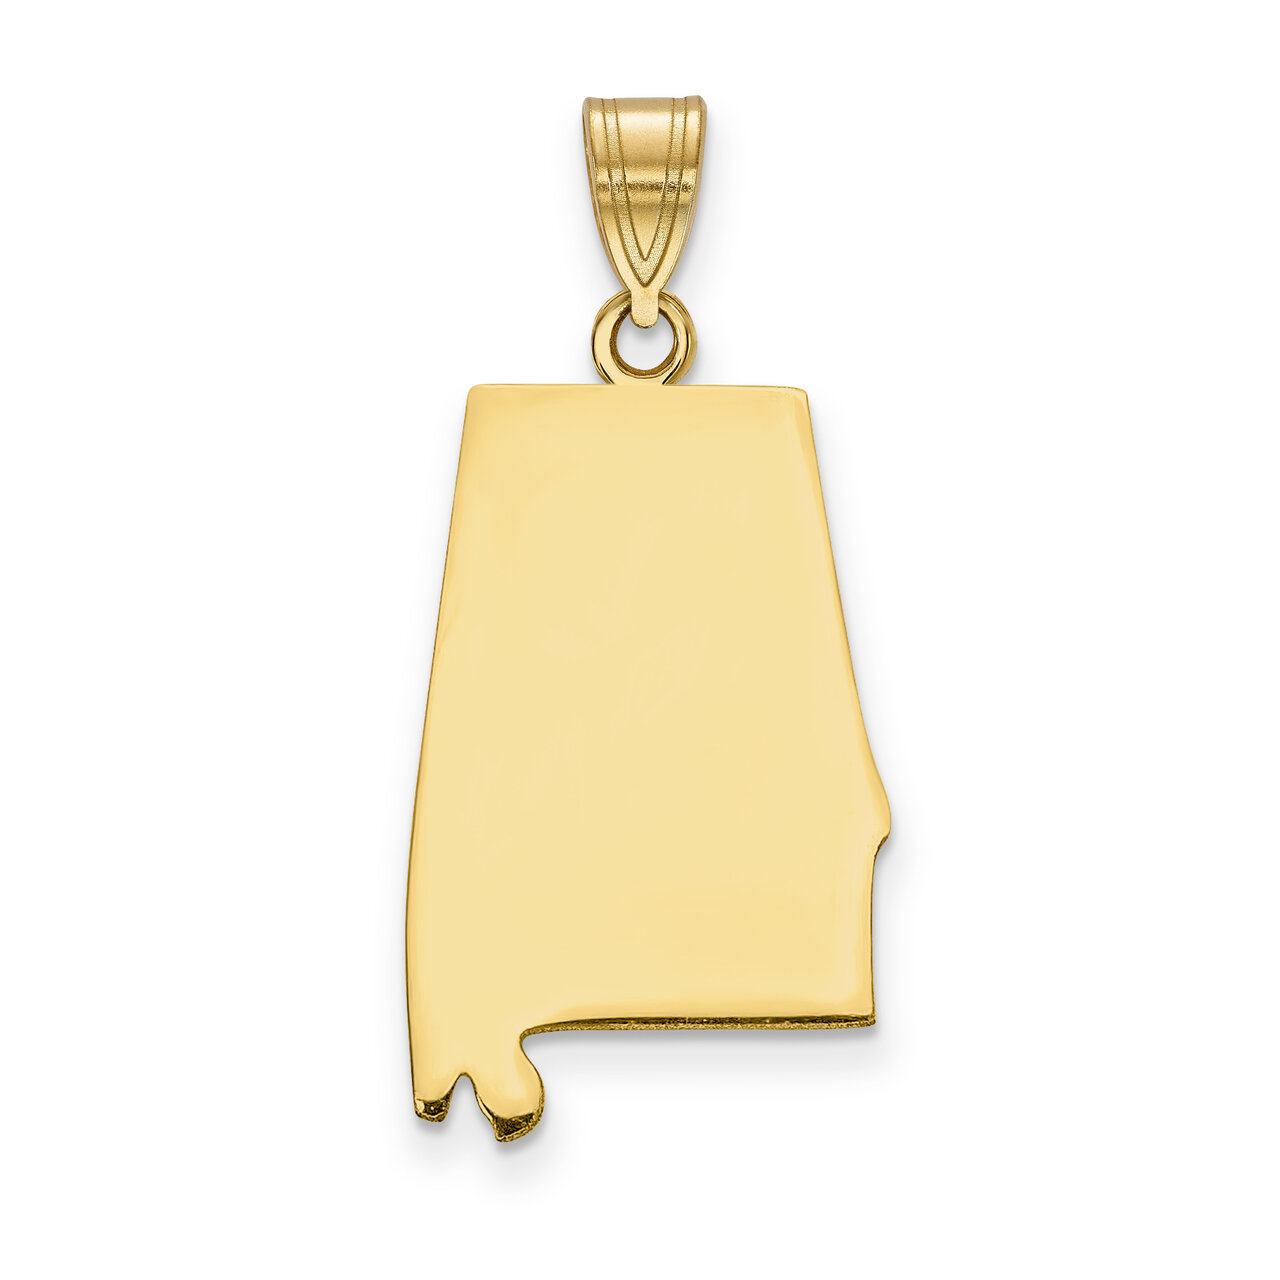 Alabama State Pendant Charm Gold-plated on Silver Engravable XNA707GP-AL